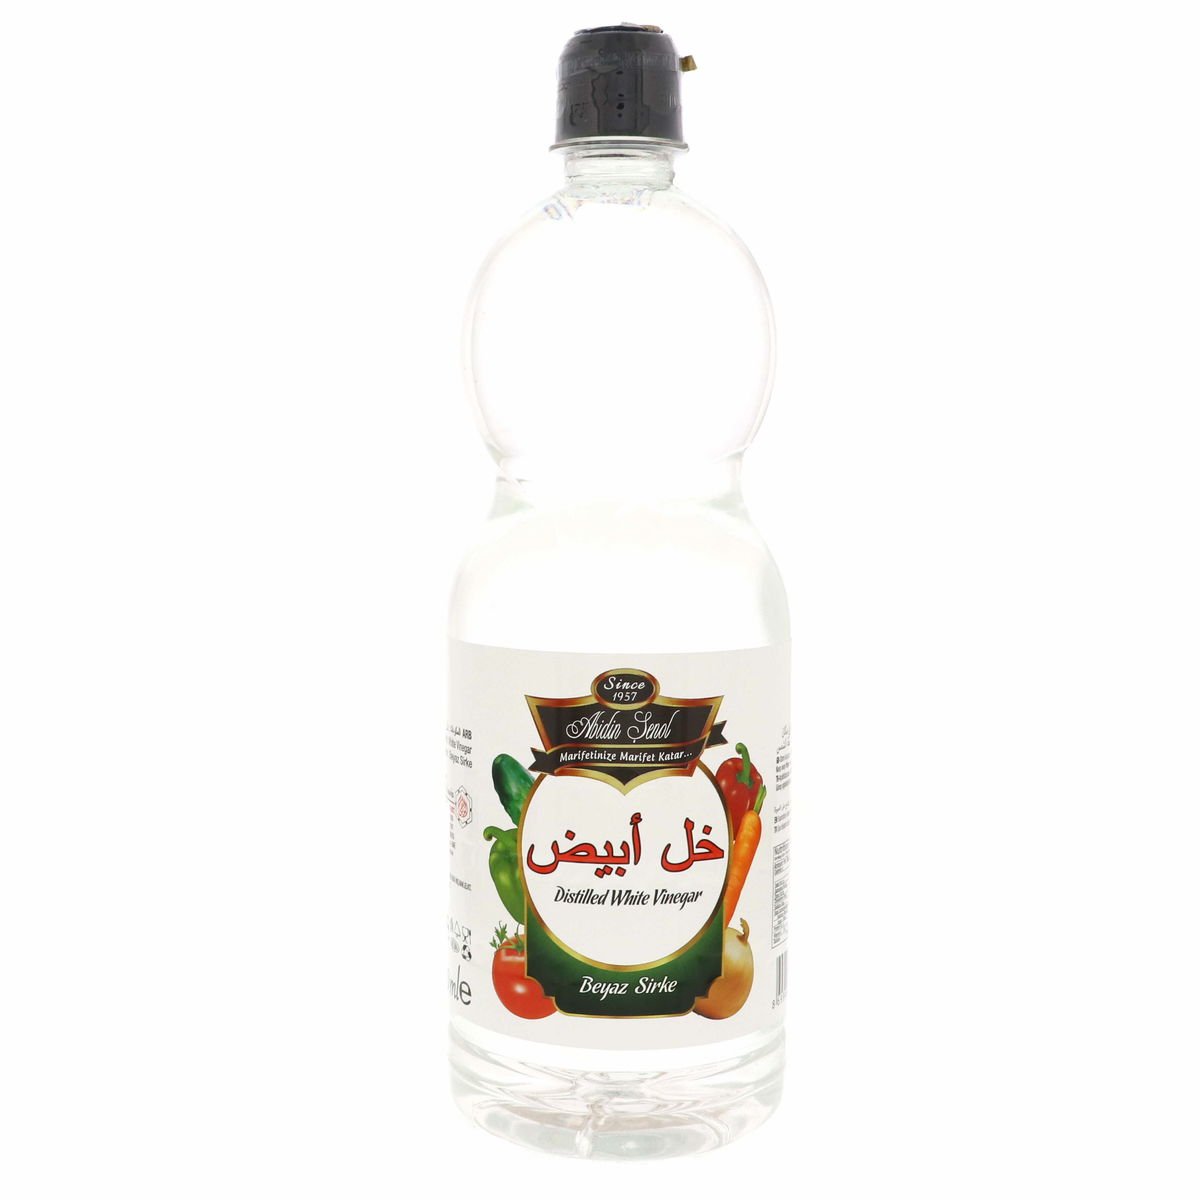 Abidin Senol Distilled White Vinegar 1 Litre